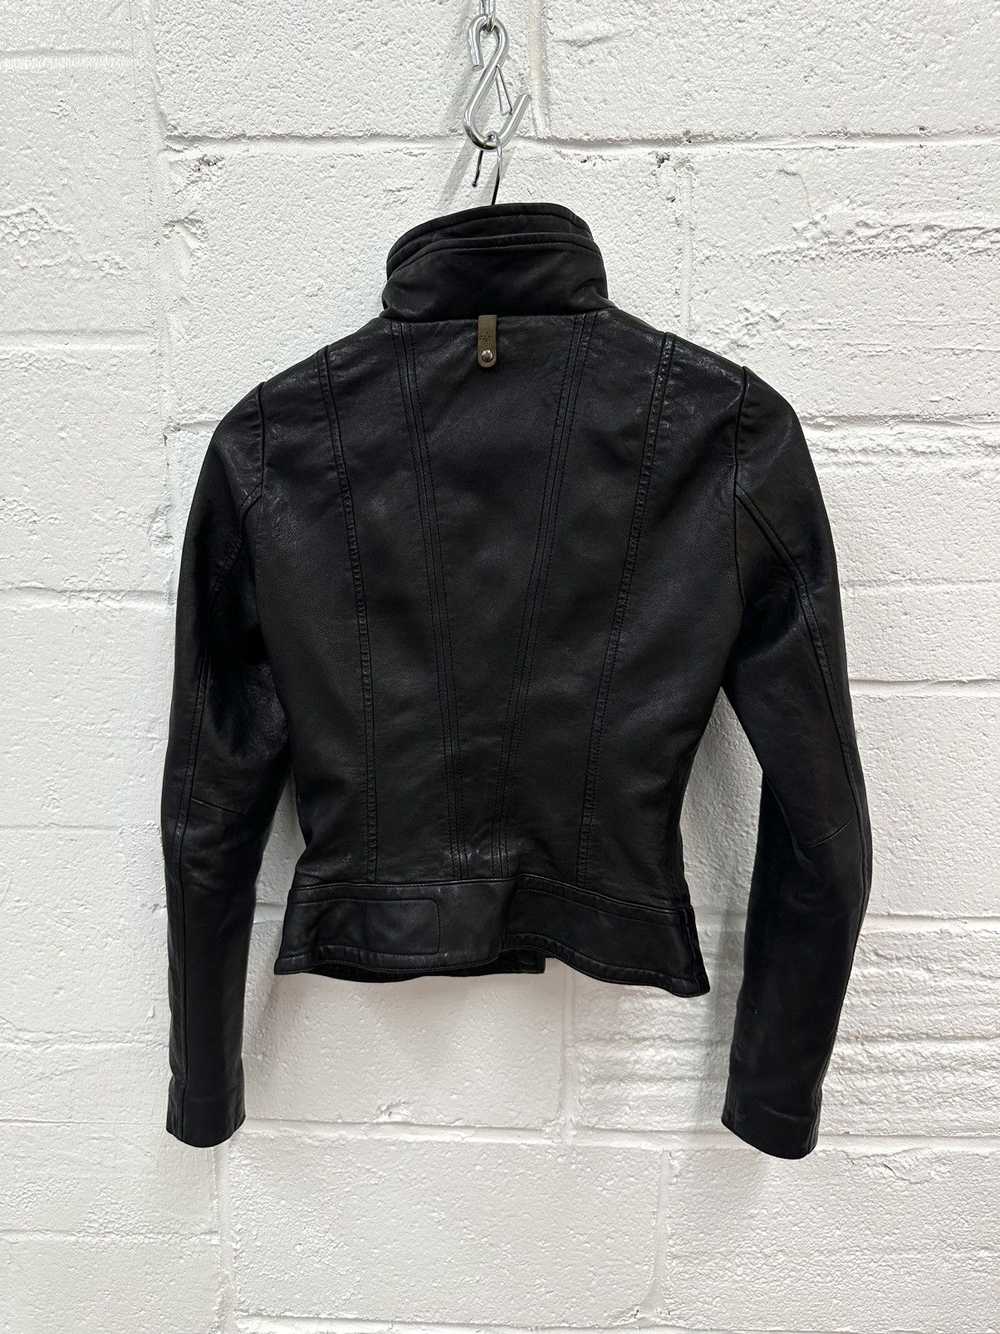 Mackage Mackage Leather Biker jacket - image 2